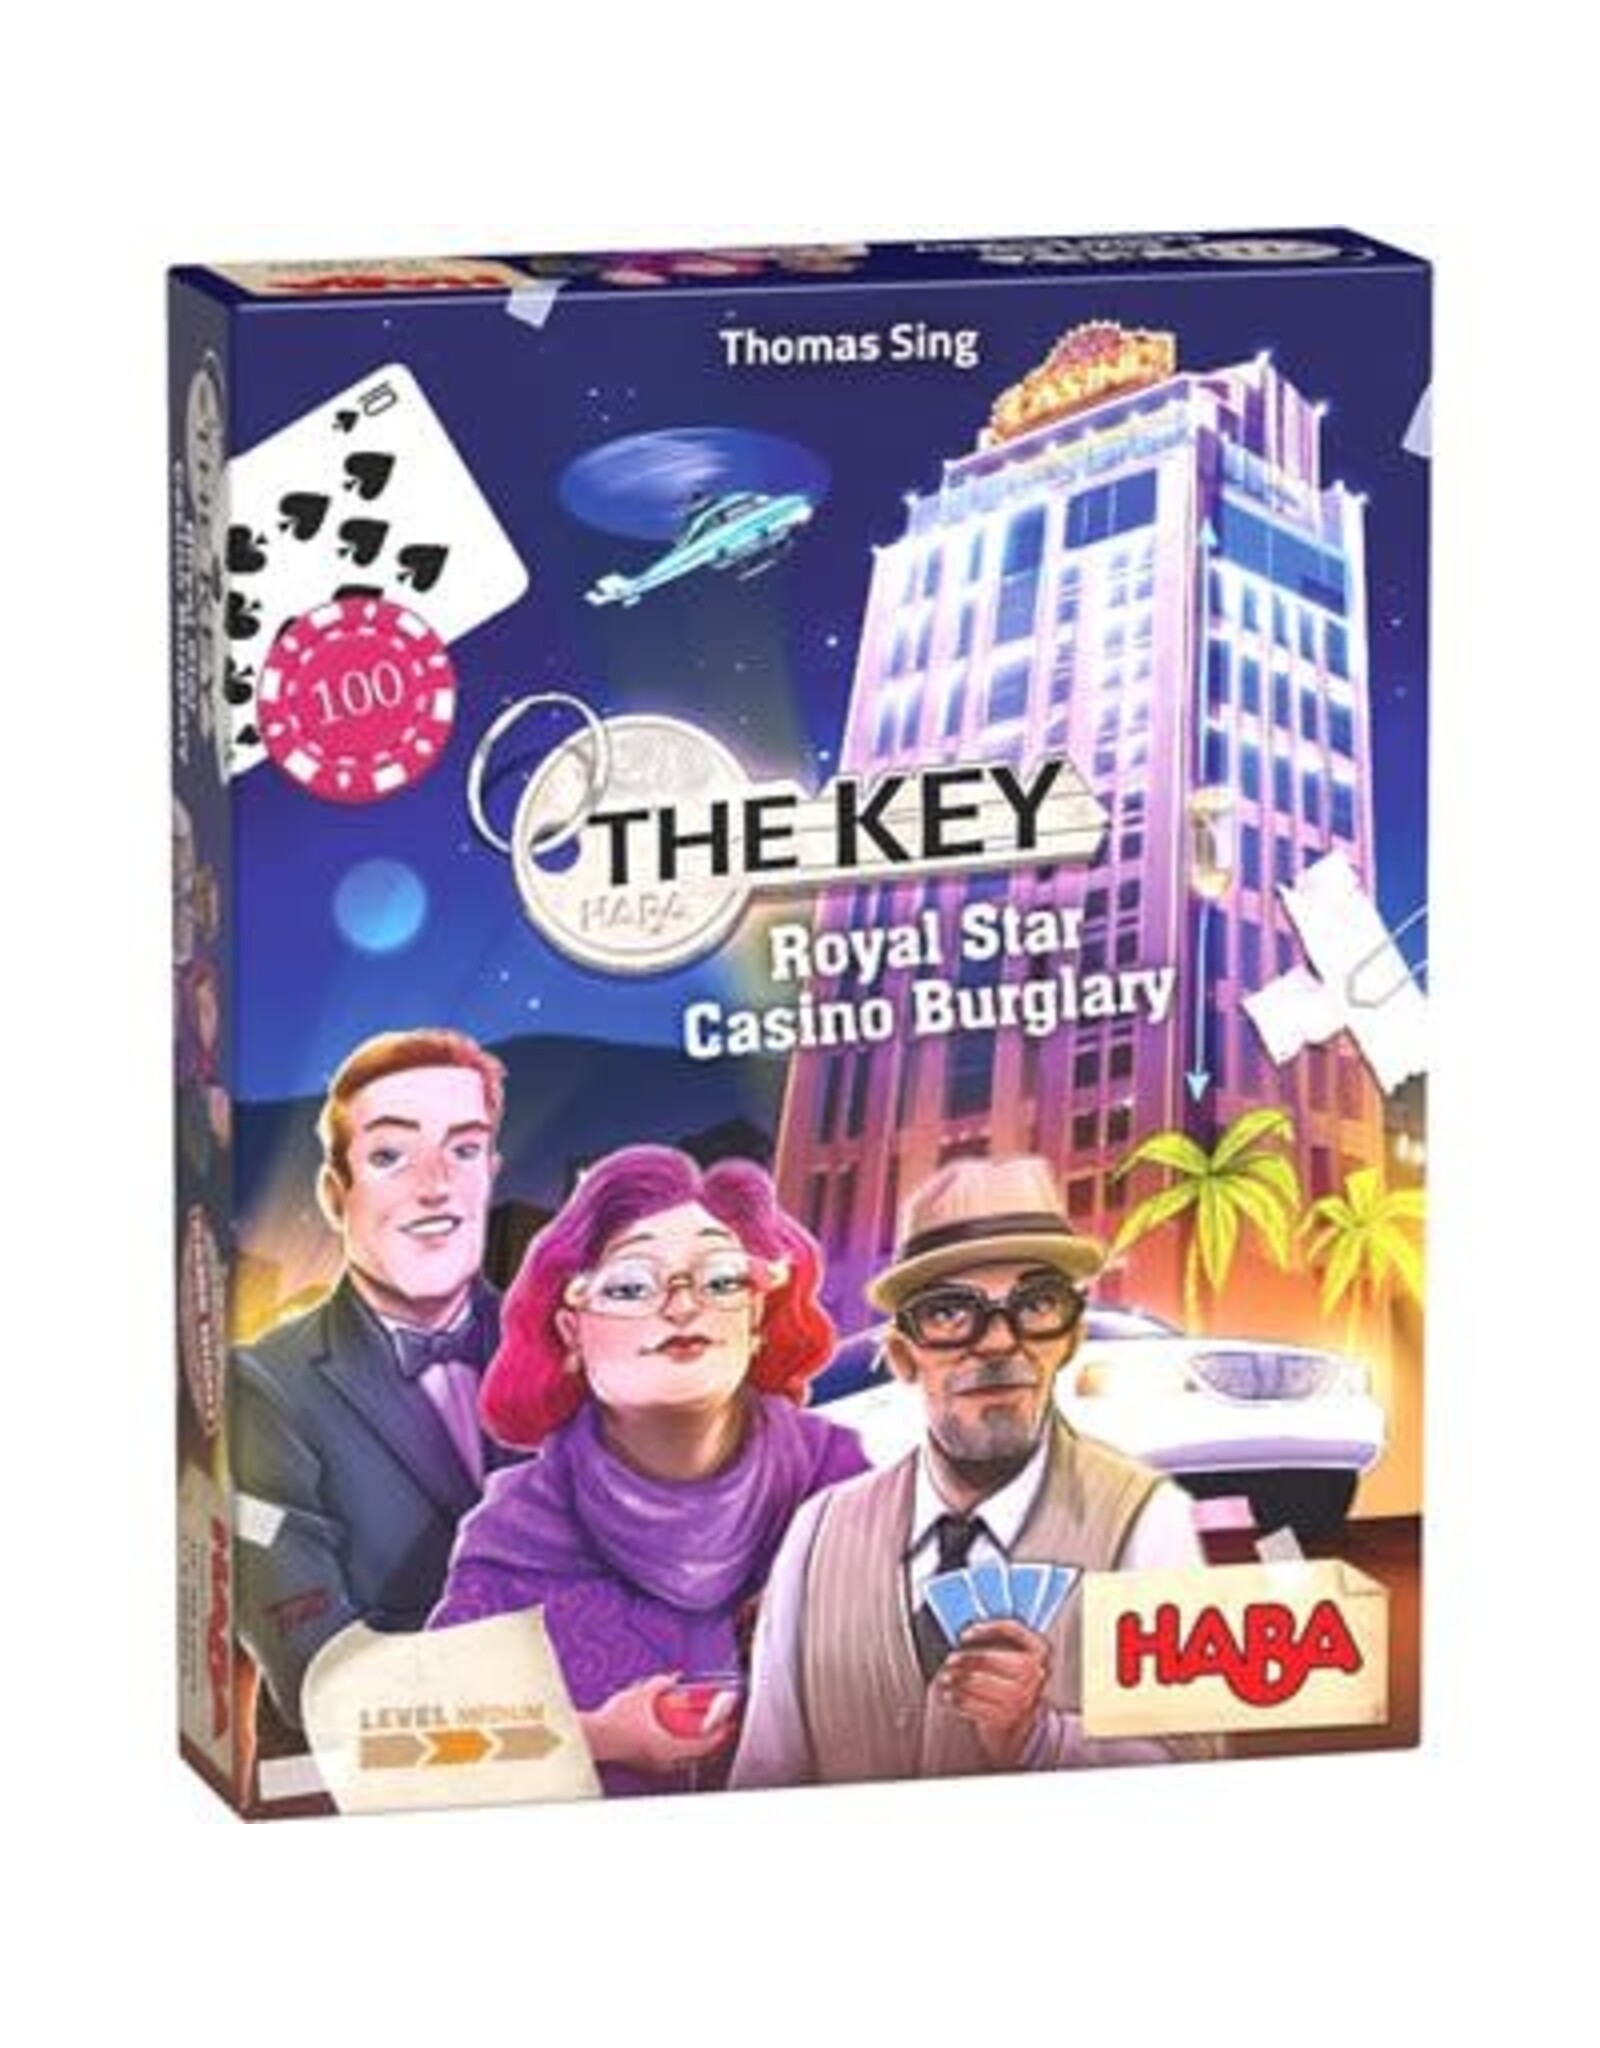 Haba The Key - Royal Star Casino Burglary